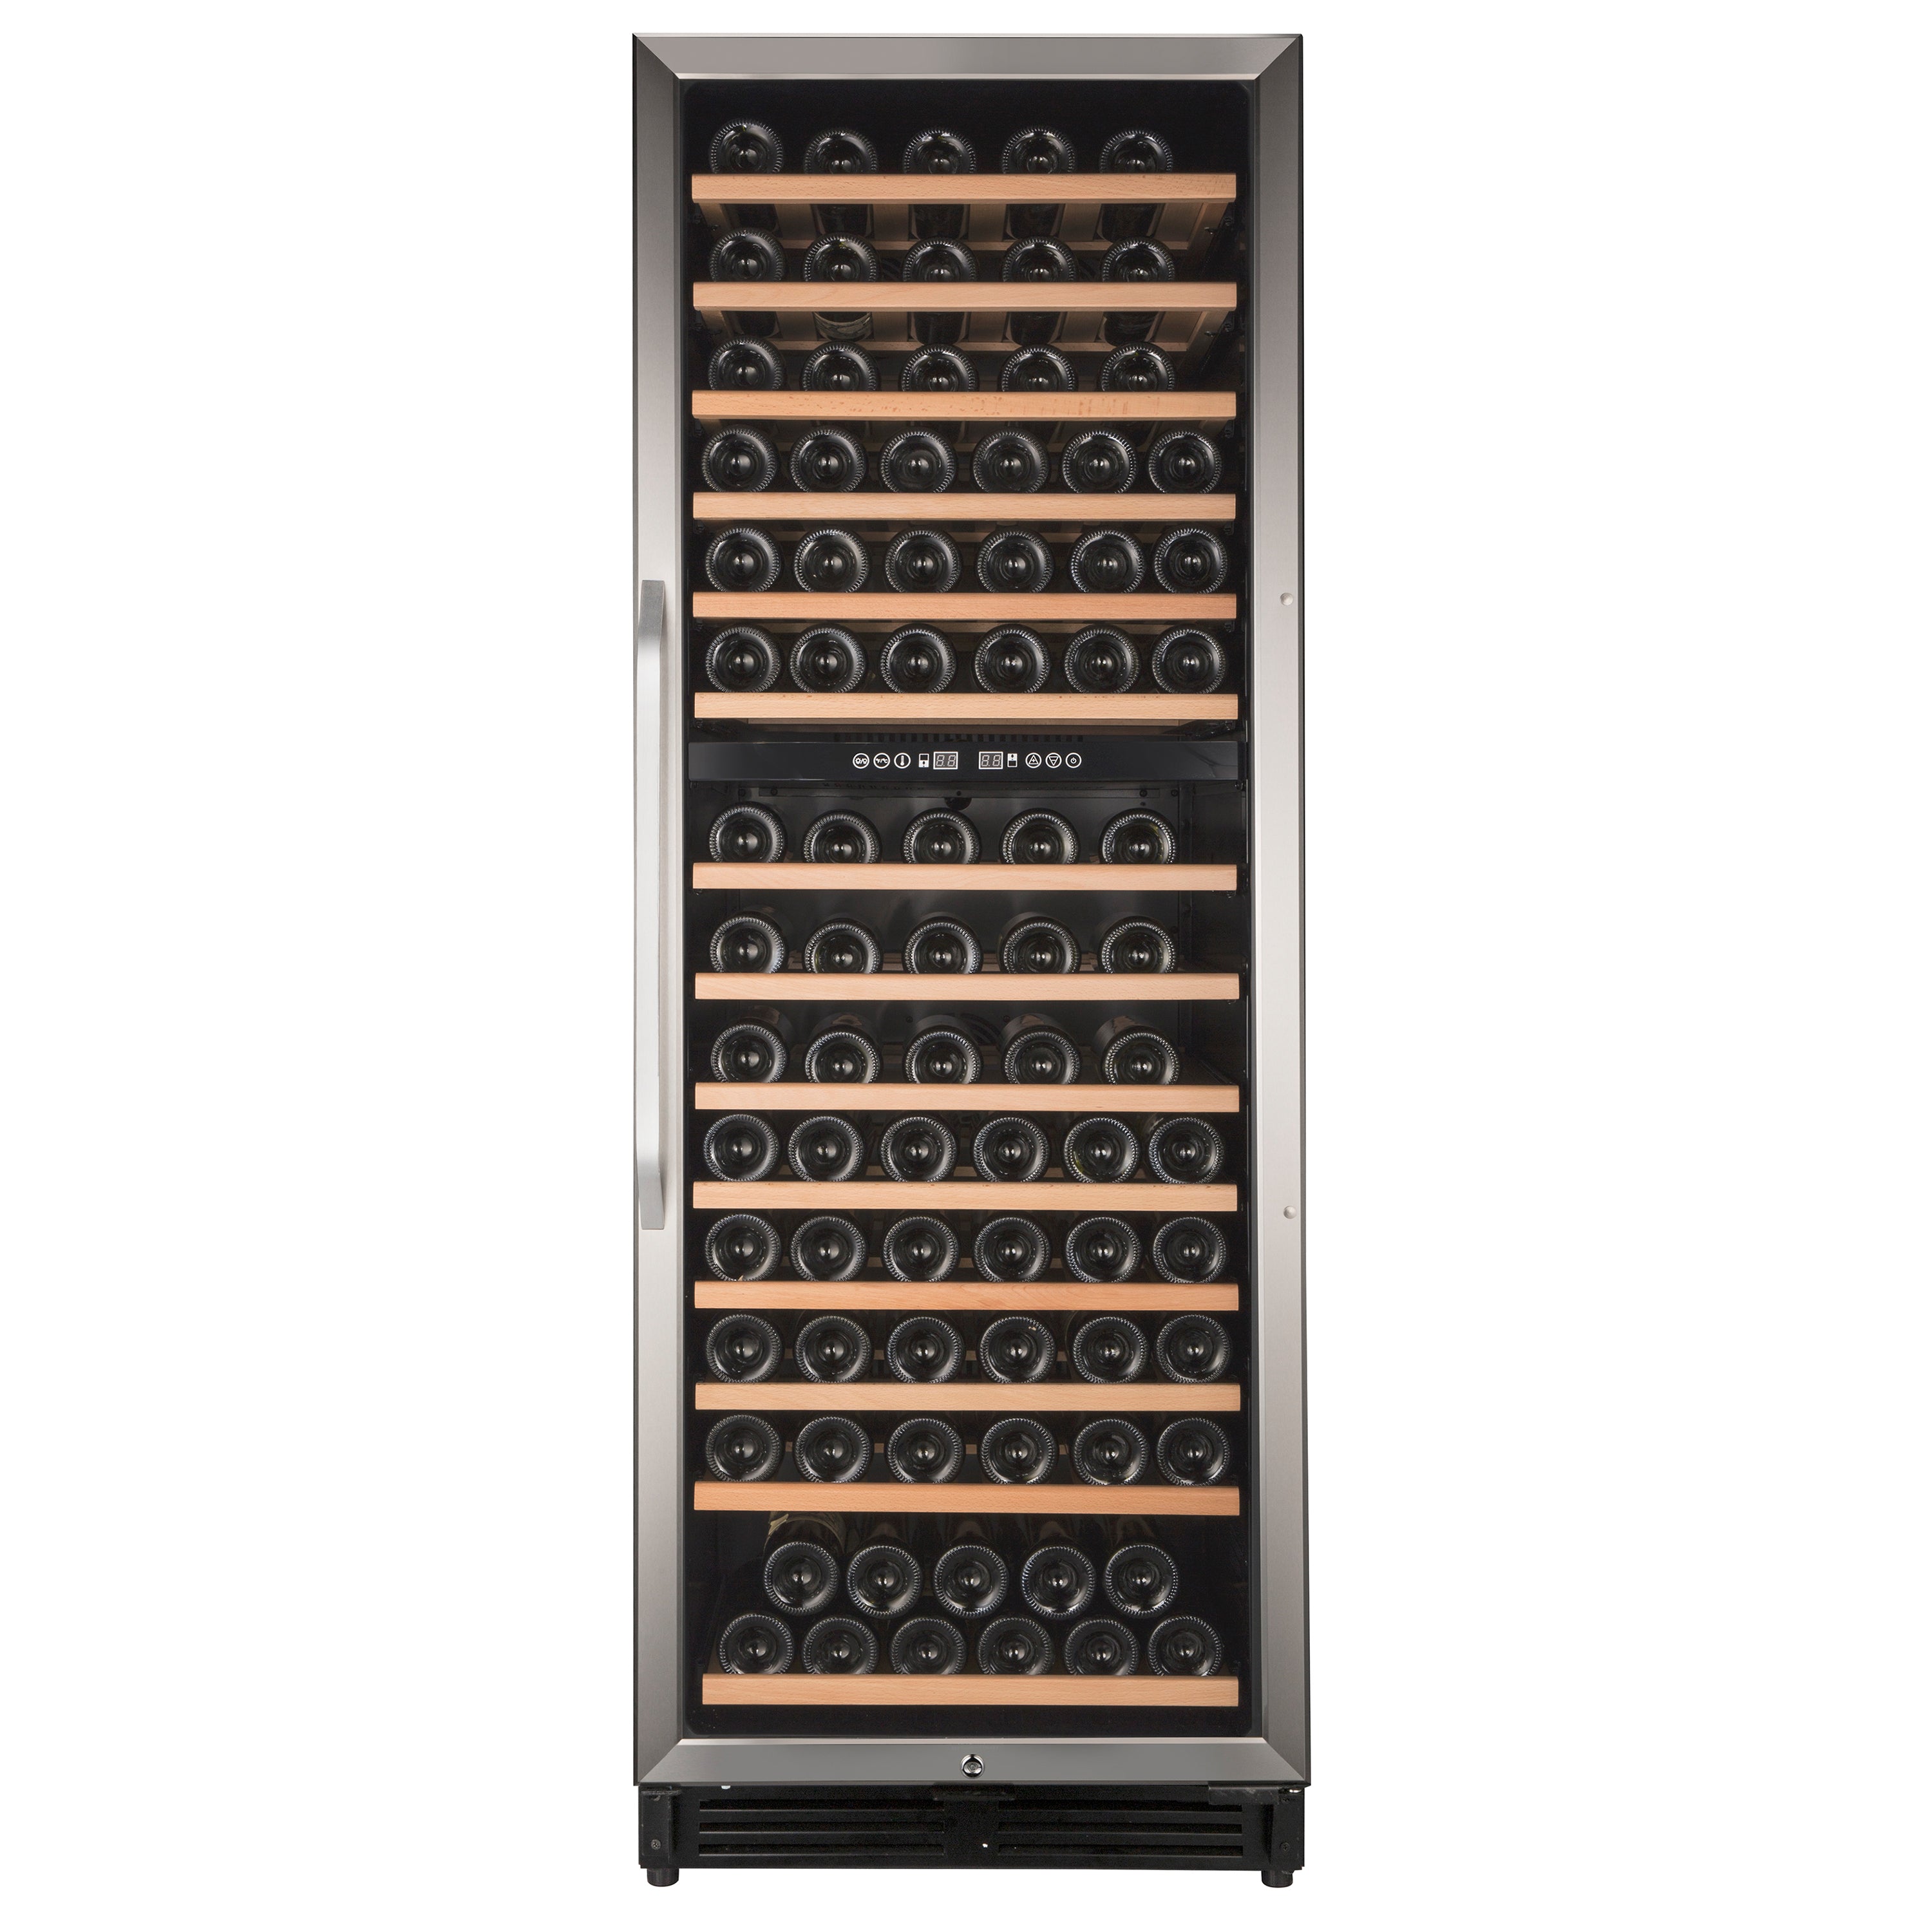 Avanti - WCF148DE3S, Avanti Dual-Zone Wine Cooler, 148 Bottle Capacity, in Stainless Steel with Wood Accent Shelving